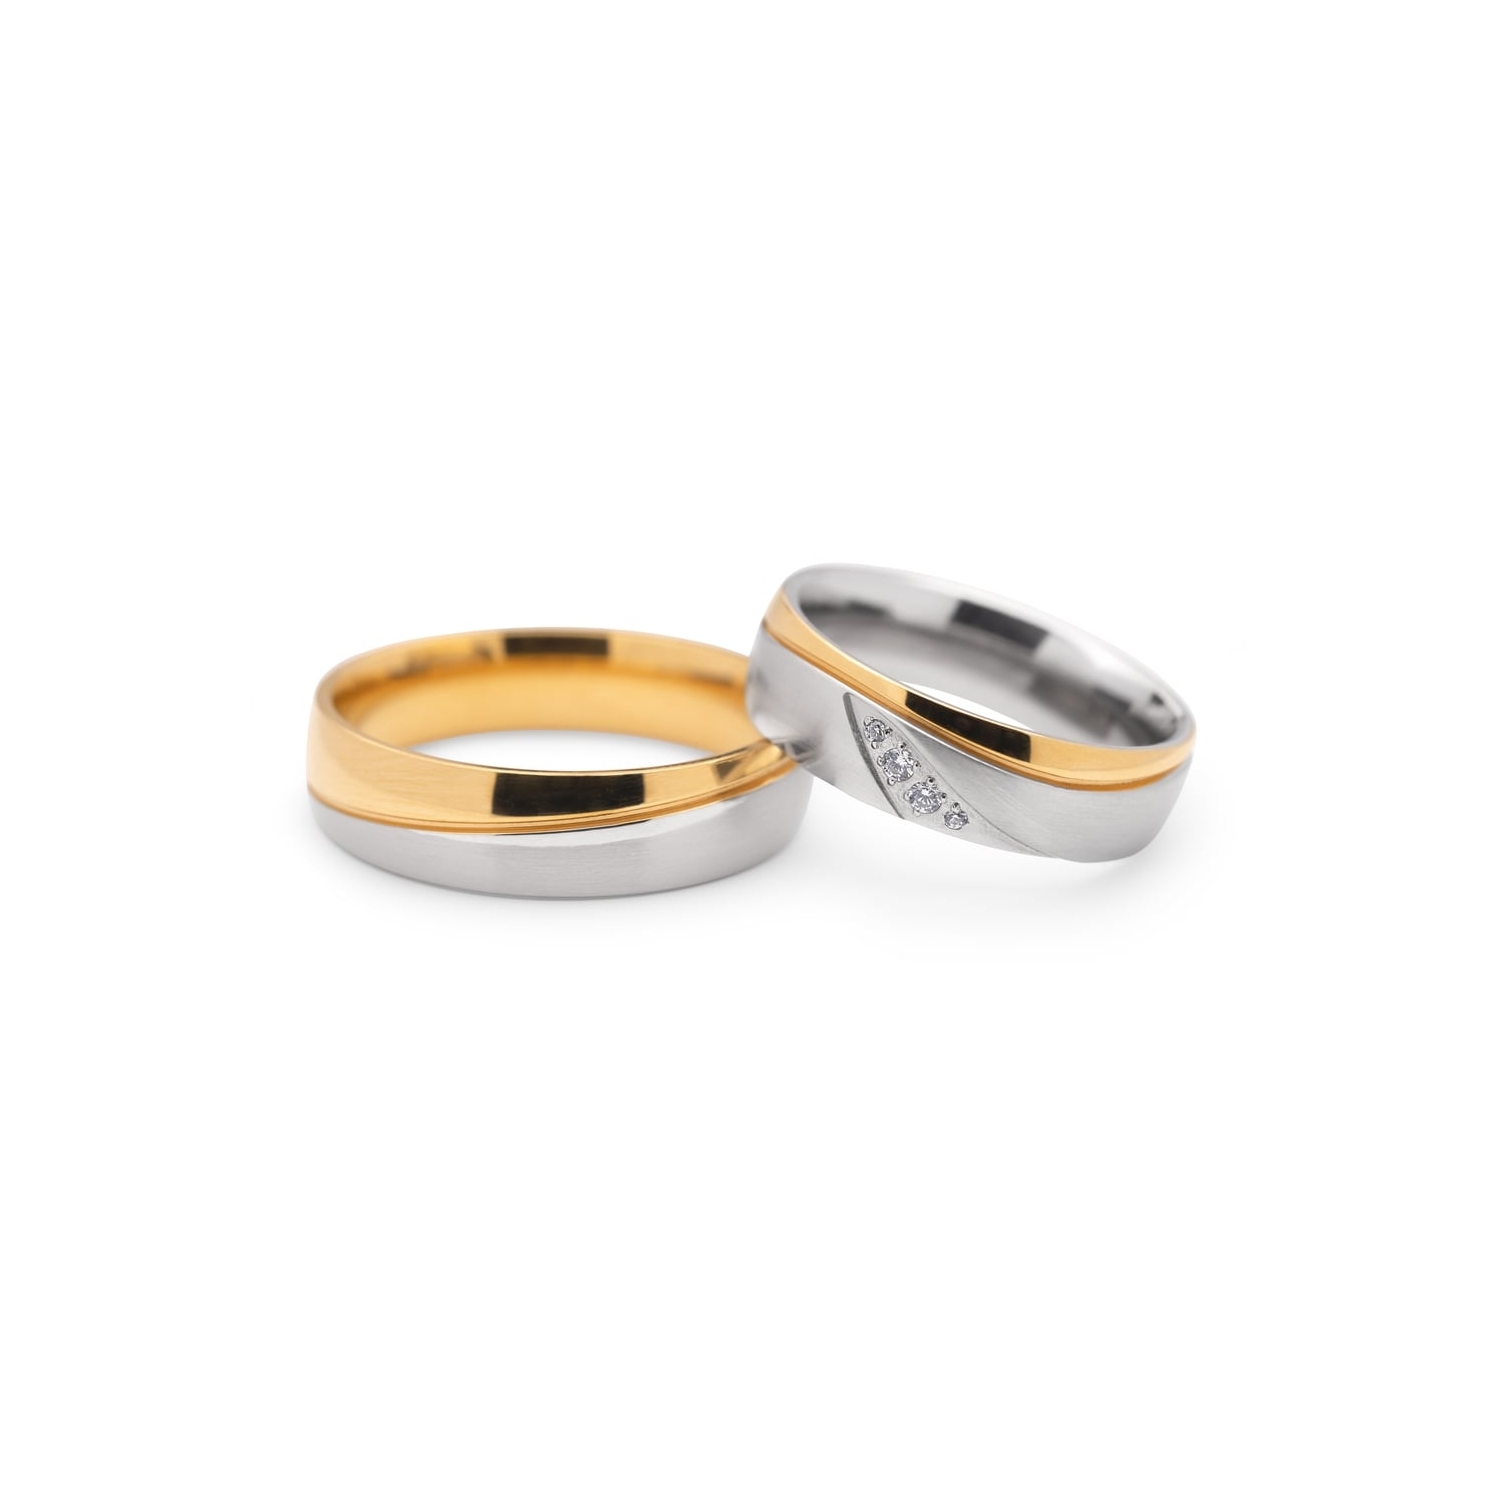 Golden wedding rings with diamonds "VKA 102"